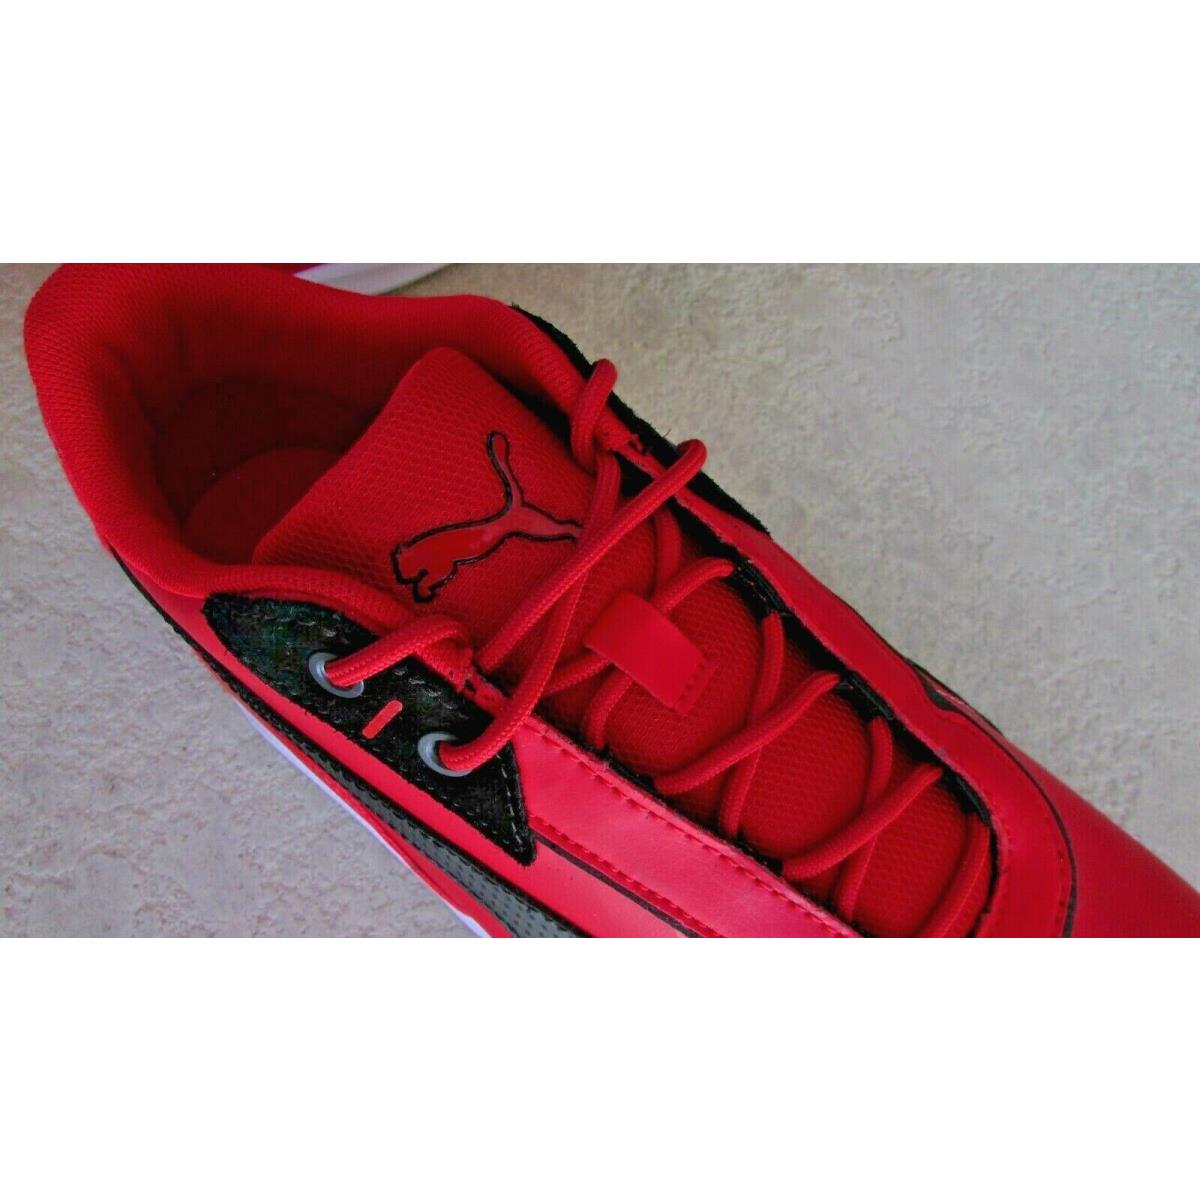 Puma shoes Driving Auto shoe - Ferrari Red 10